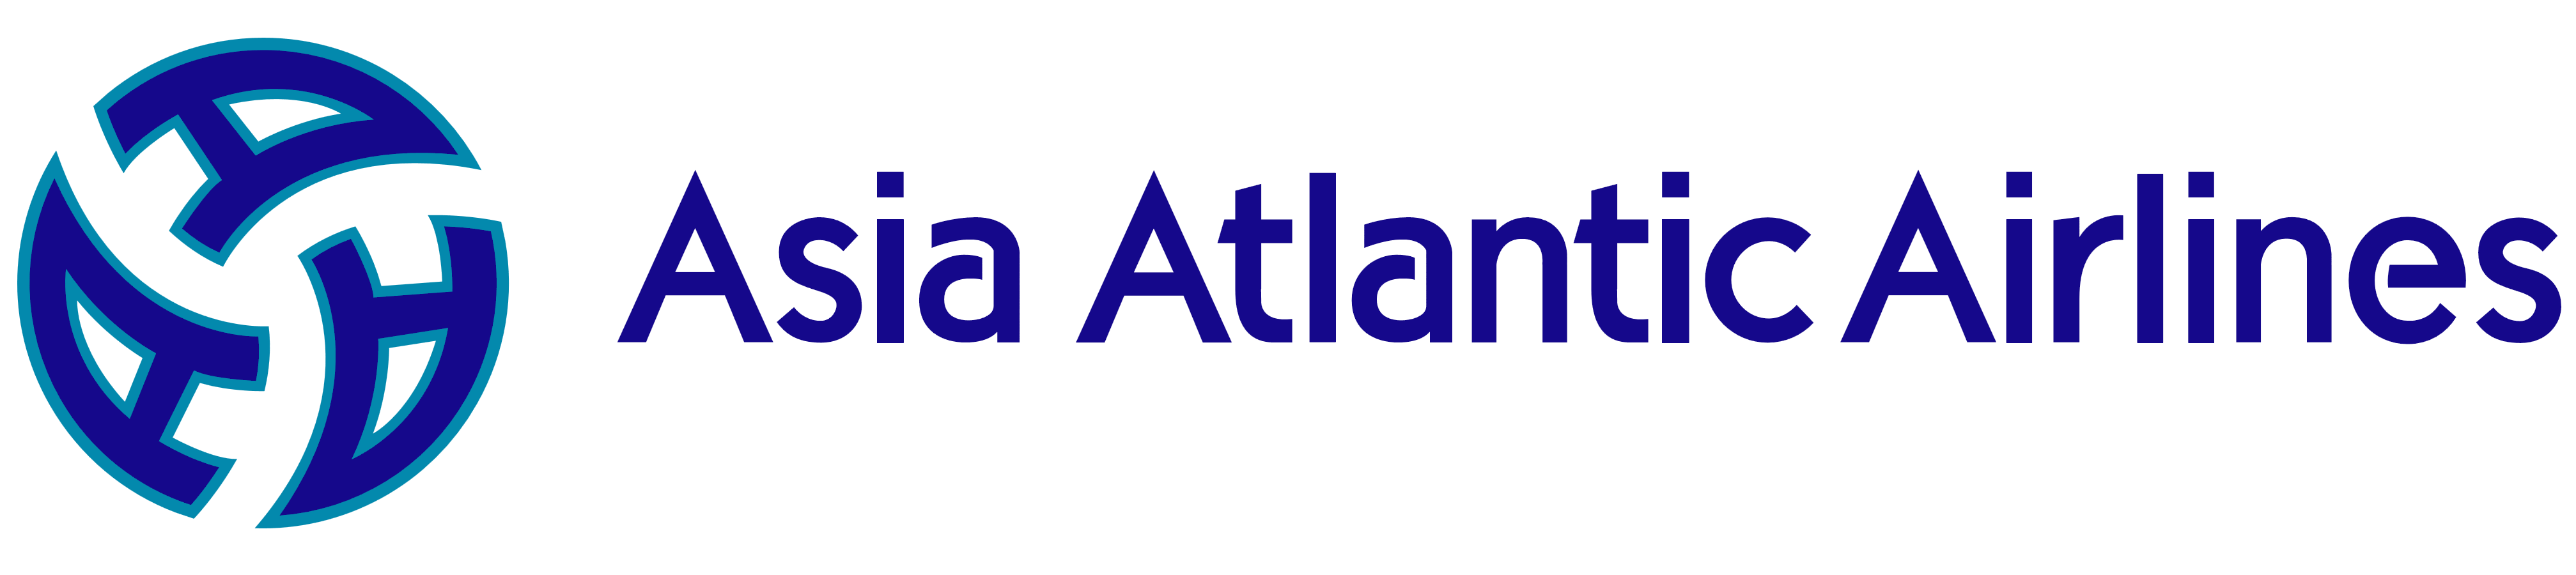 Asia Atlantic Airlines logo, logotype